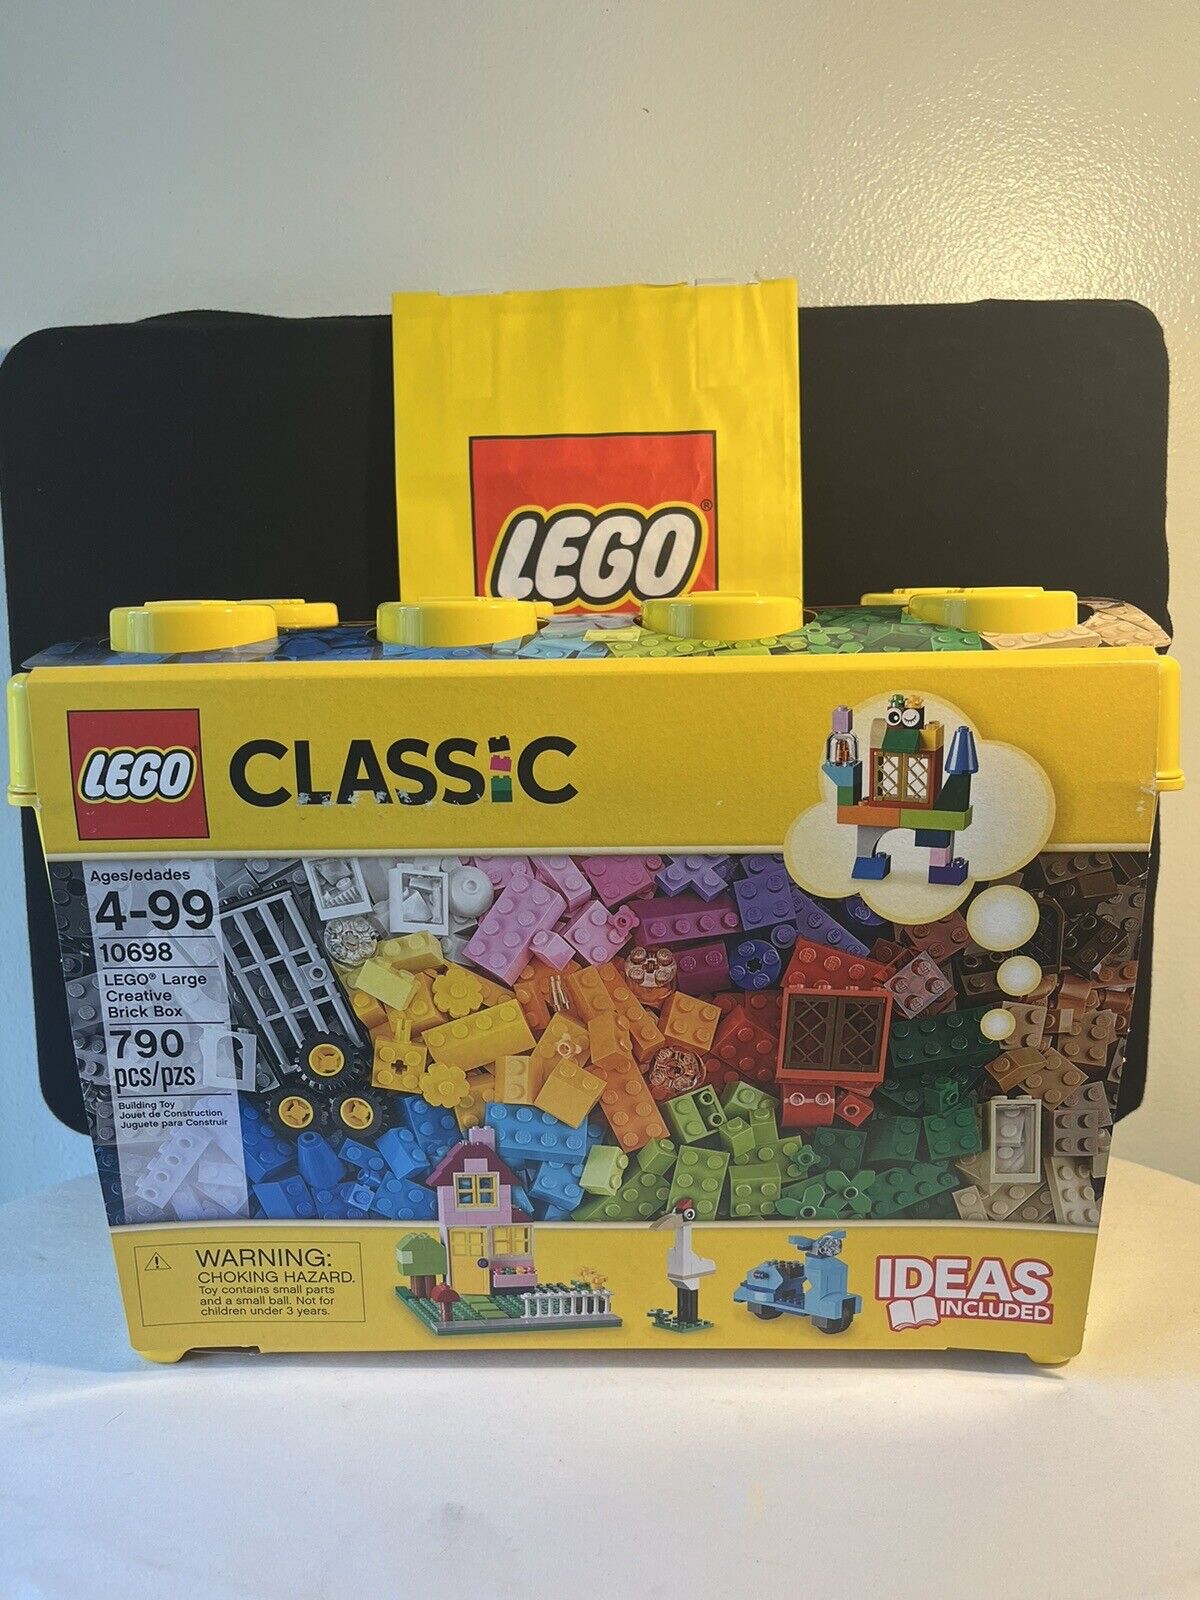 Lego Classic Large Creative Brick Box. NEW, F-Sealed. Ages 4-99. PCS 790.